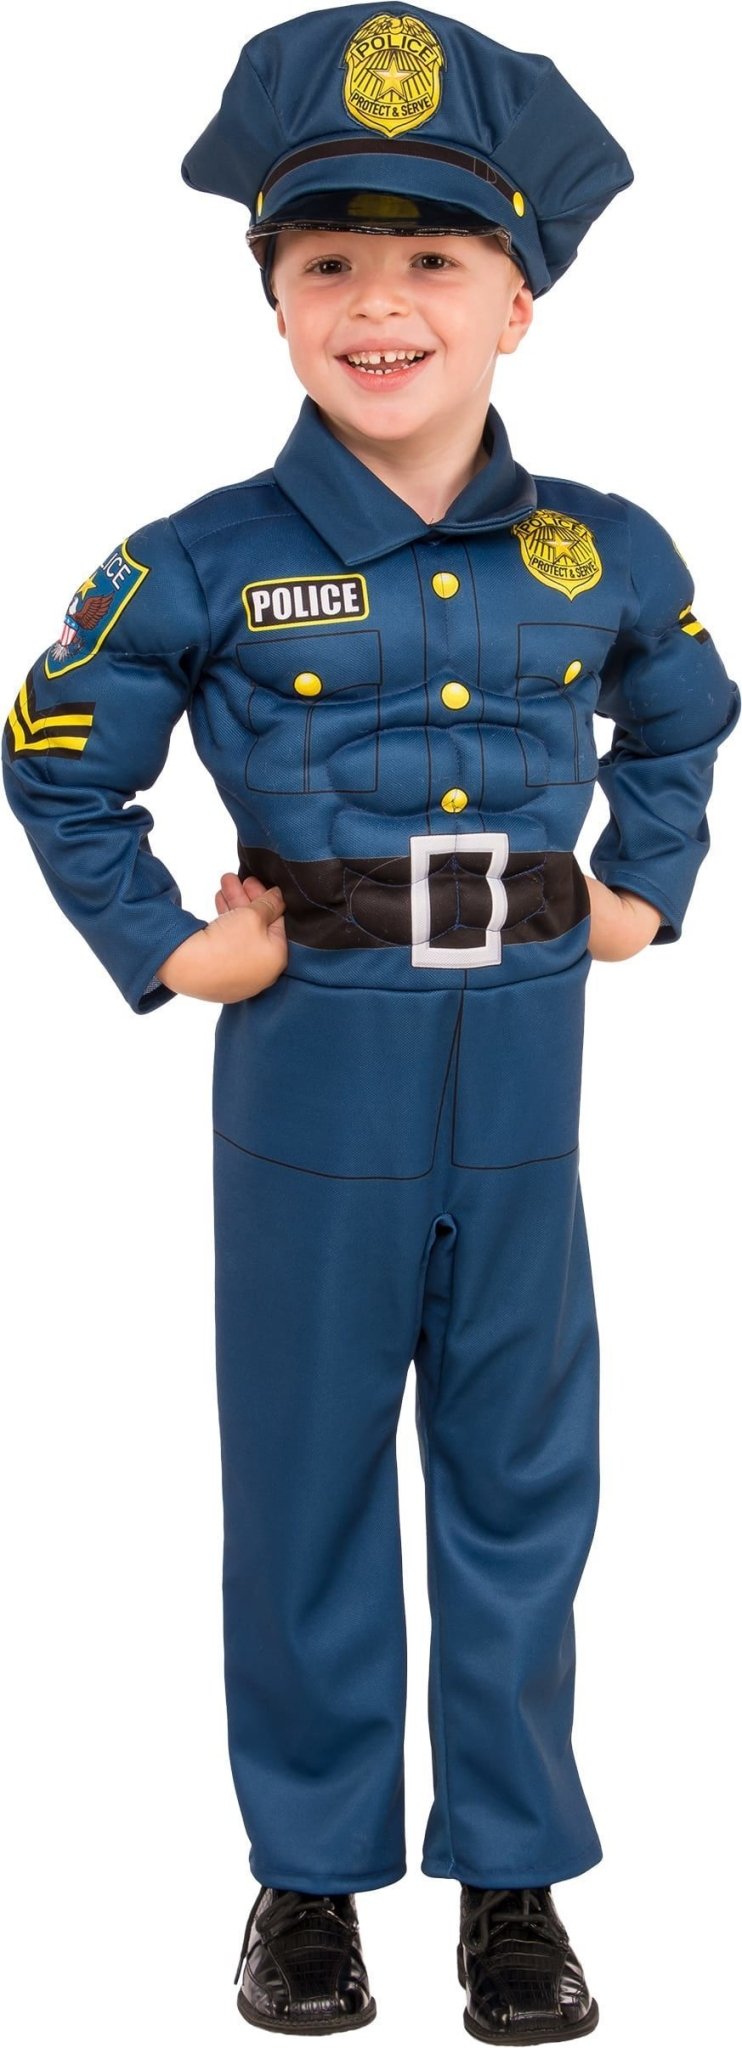 Boys Top Cop Costume RUB-510332 MEDIUM - JJ's Party House